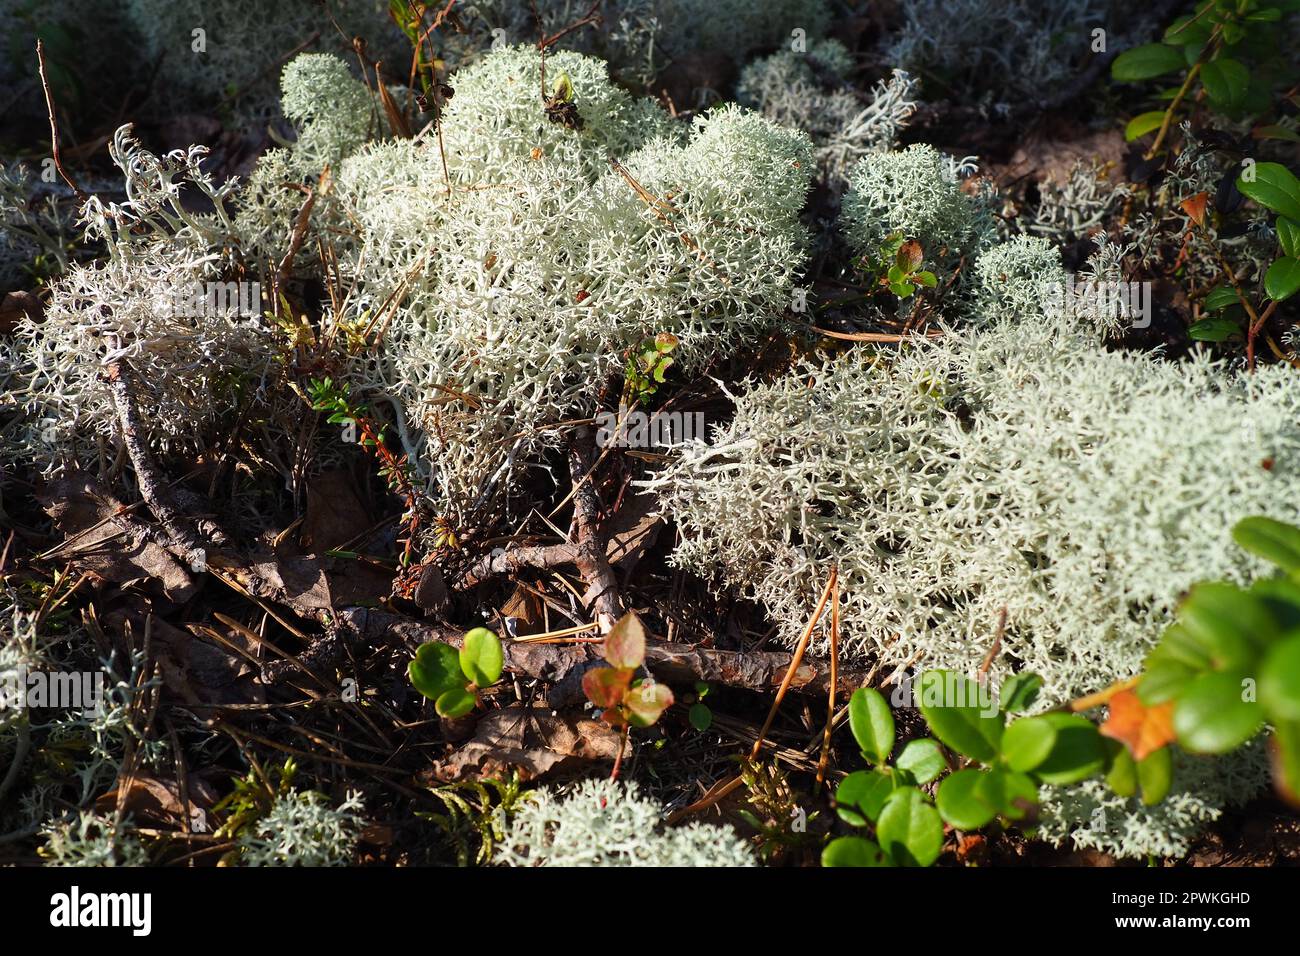 Reindeer lichen reindeer moss. Cladonia, genus of lichens in the Cladonia family Cladoniaceae. Mushroom kingdom. Karelia, Russia, taiga tundra. Cetrar Stock Photo